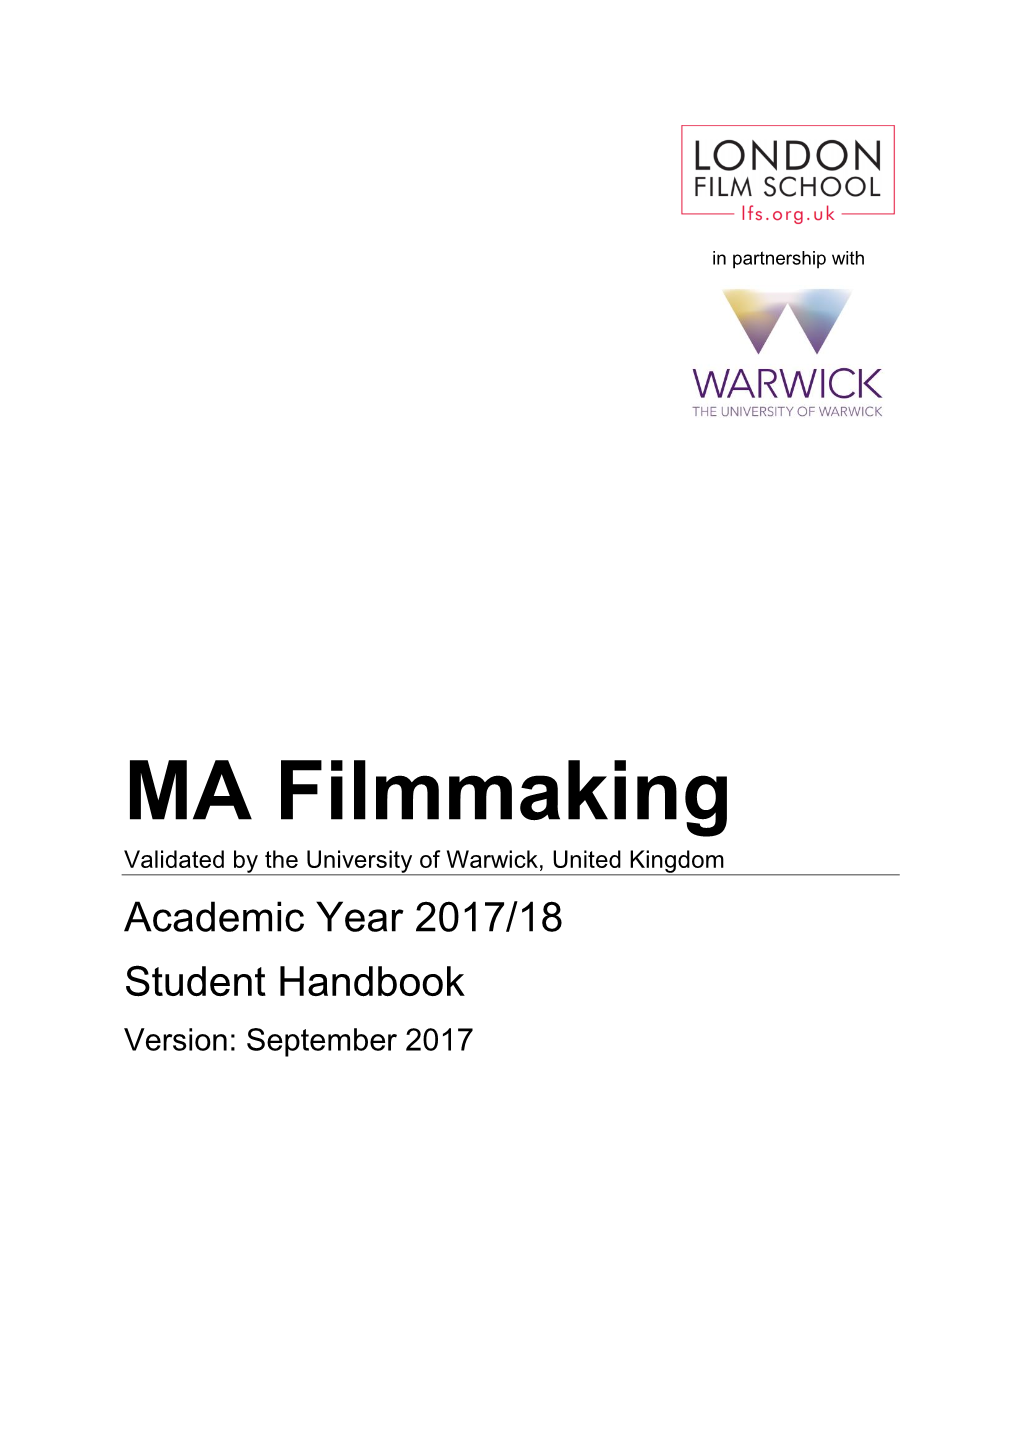 MA Filmmaking Student Handbook 2017/18 1 Version: September 2017, Final